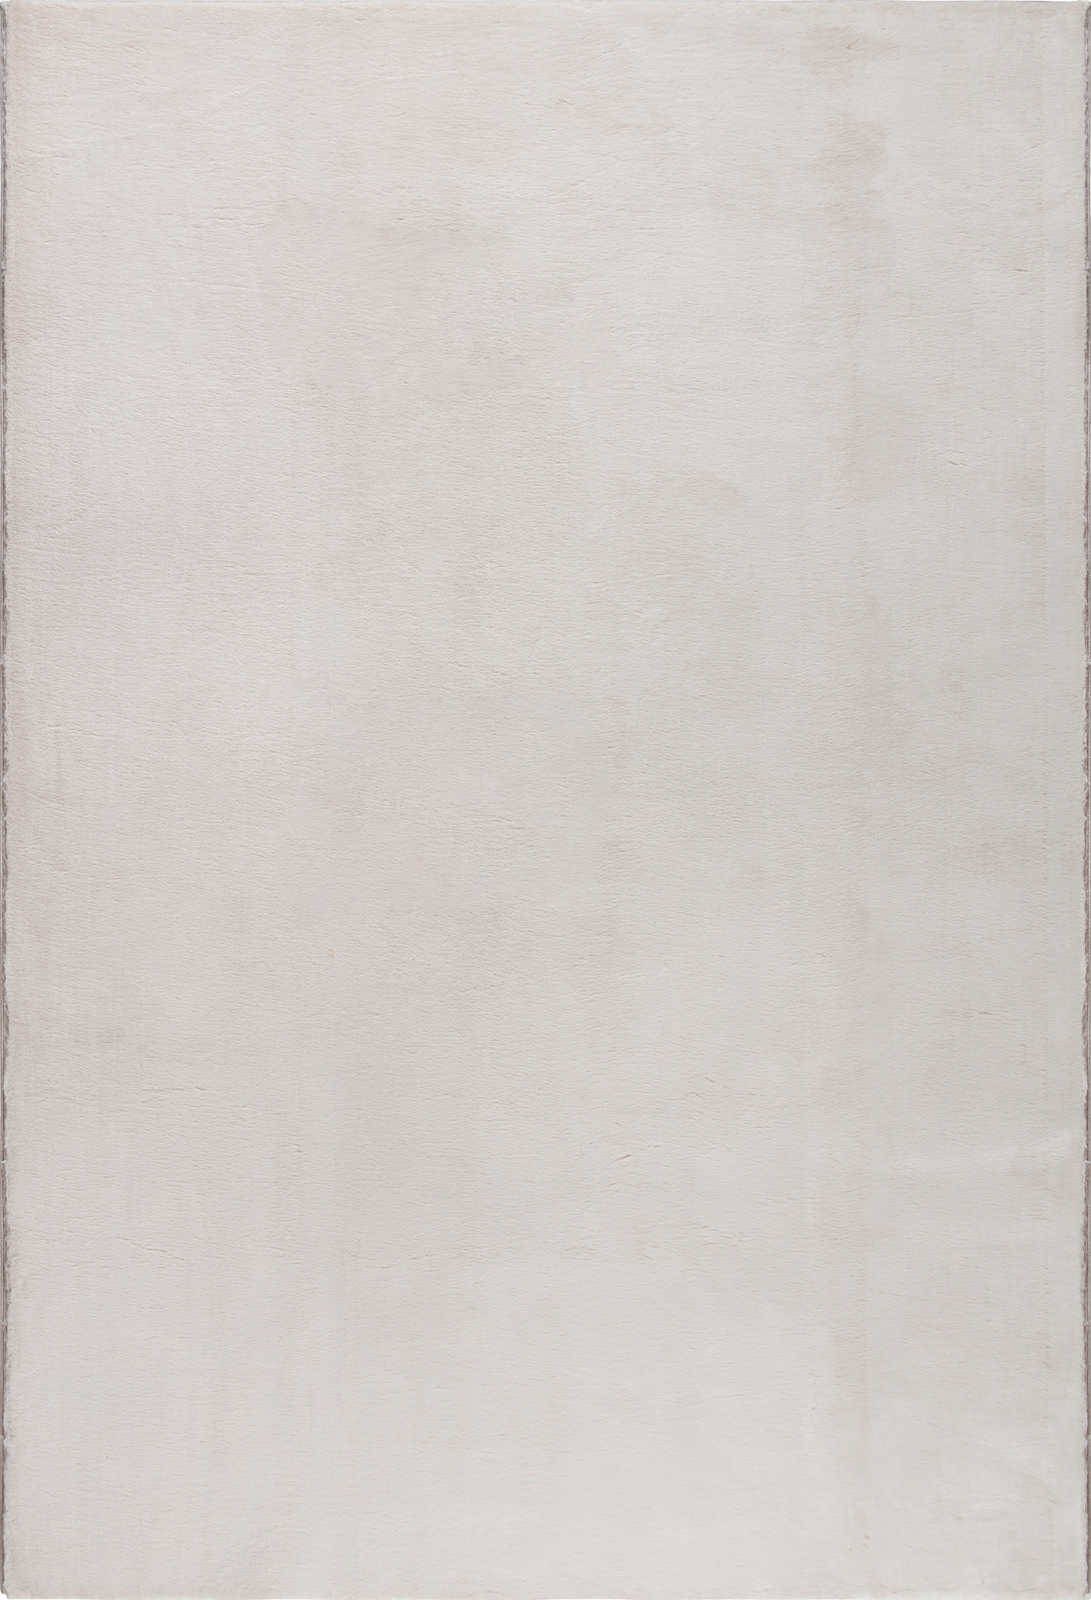             Knuffelzacht hoogpolig tapijt in lichtbeige - 200 x 140 cm
        